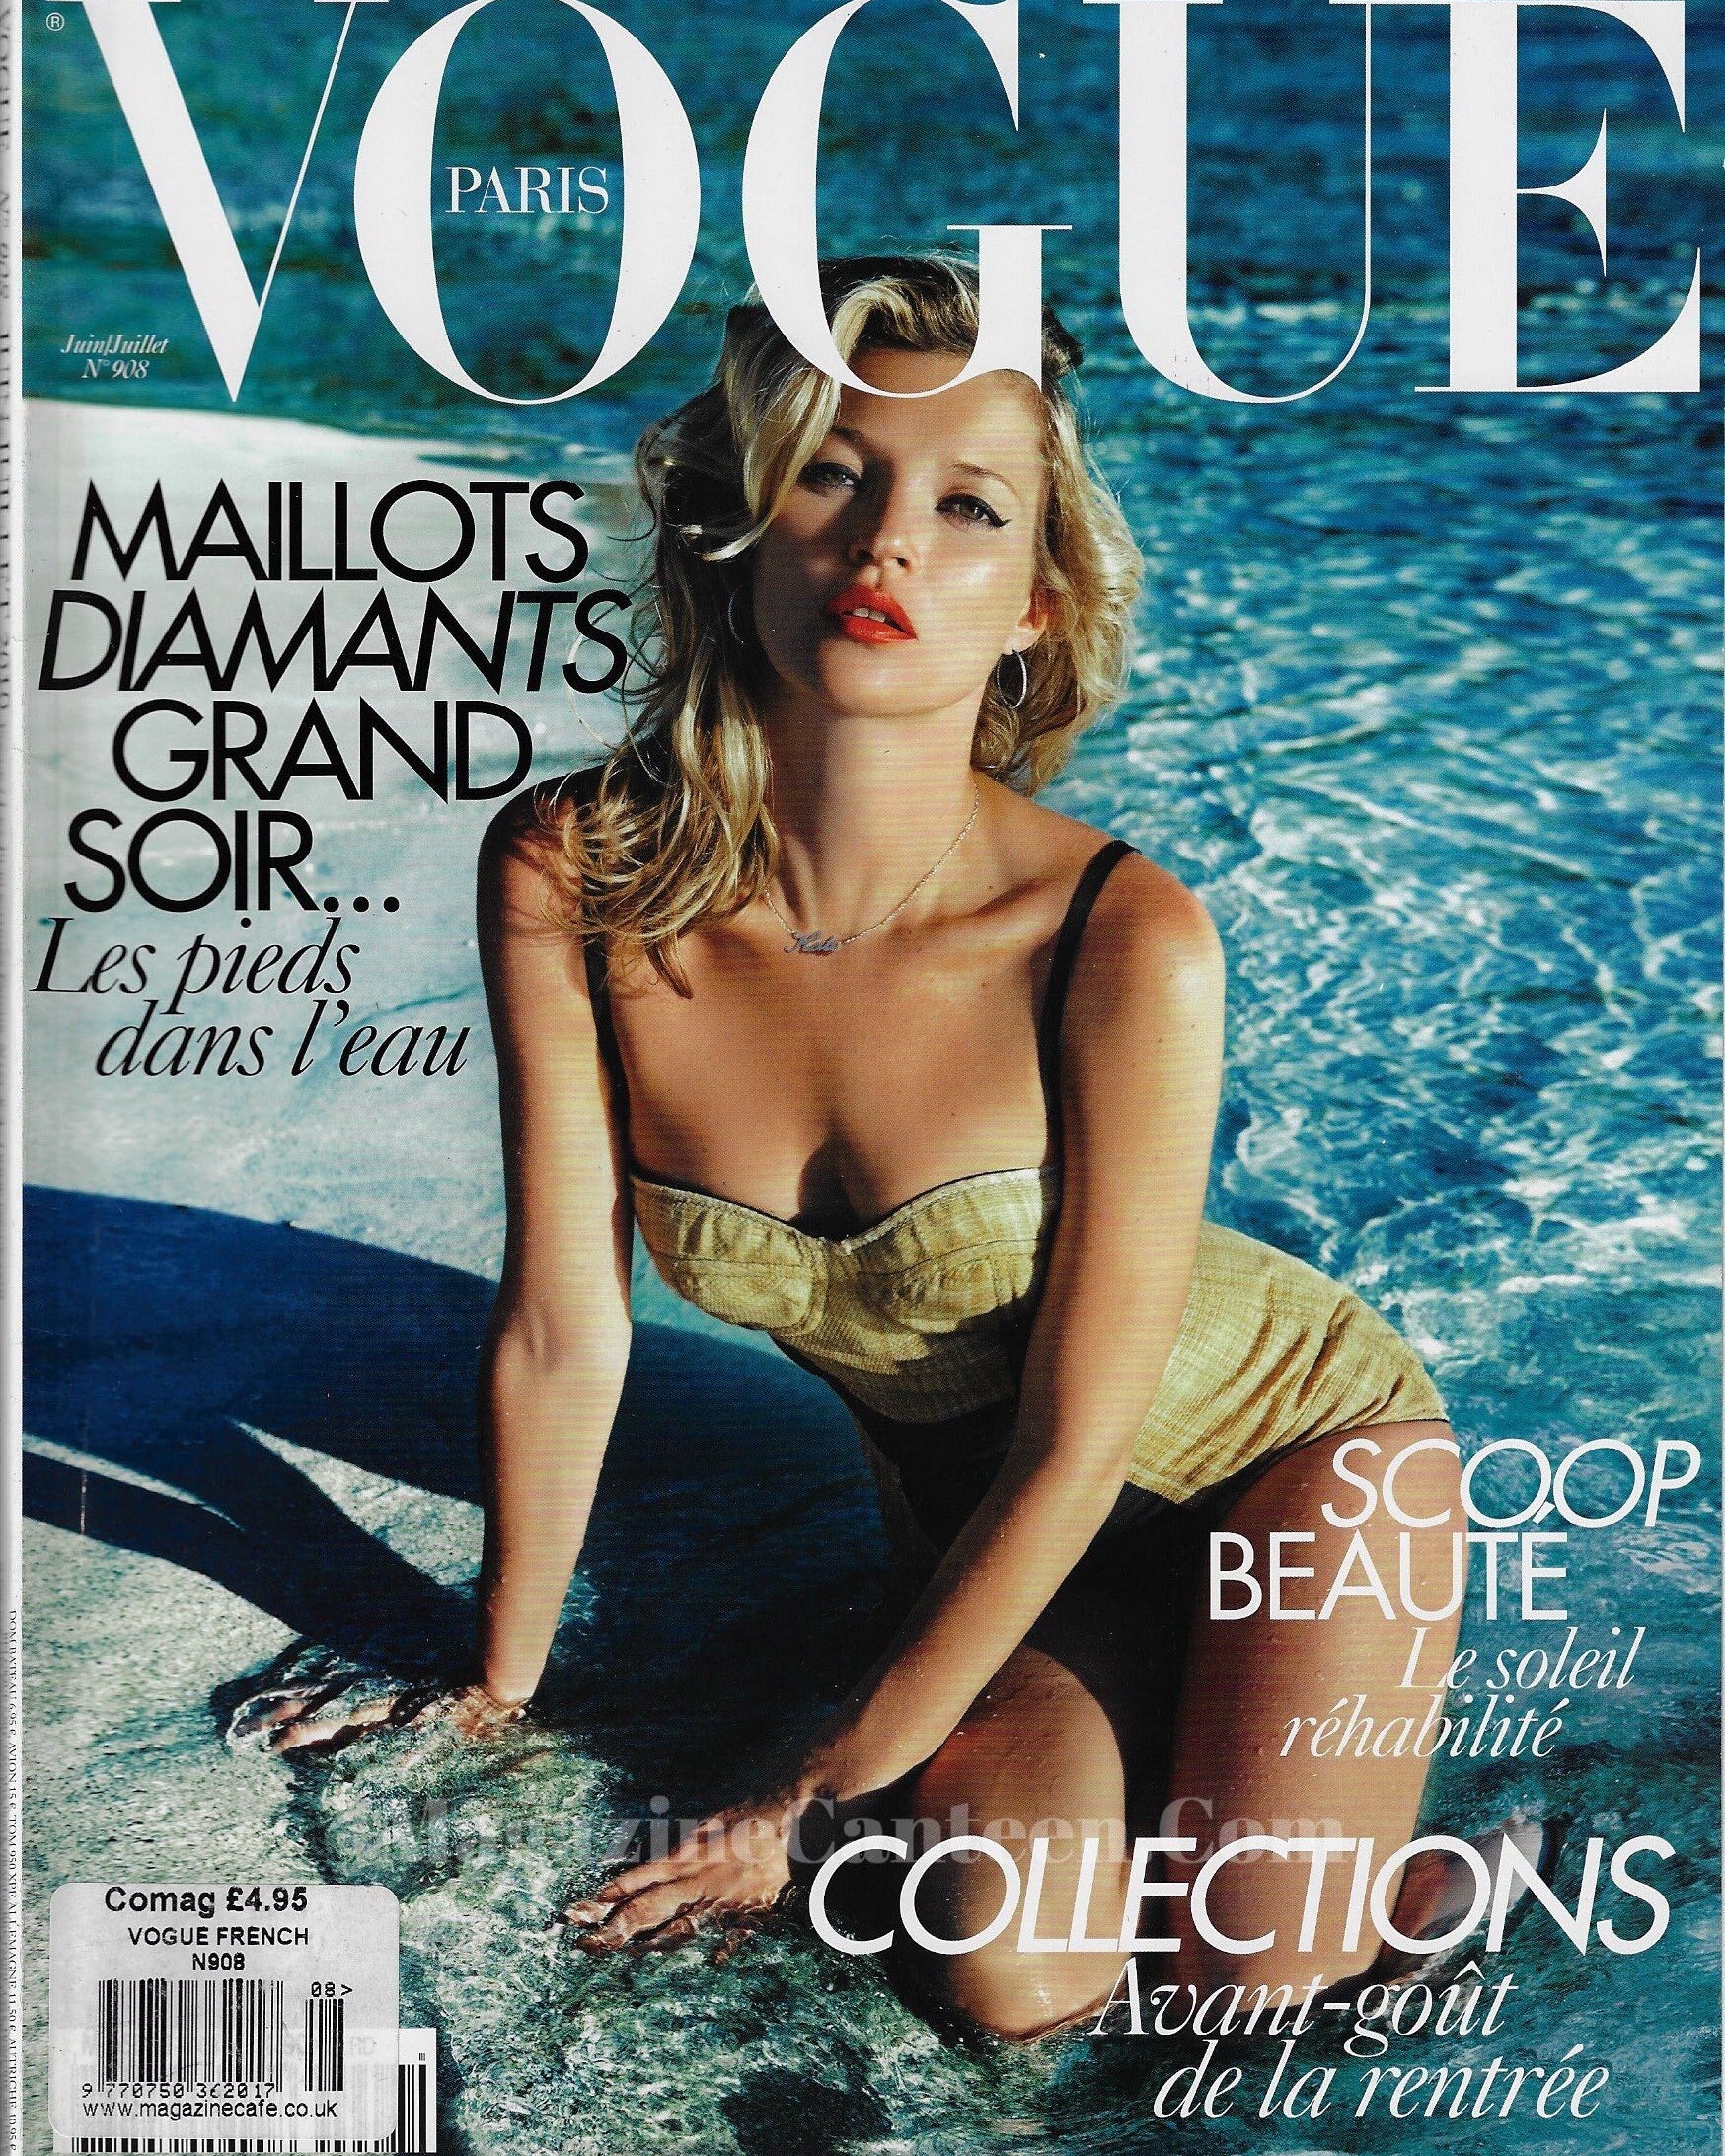 Vogue Paris Magazine 2010 - Kate Moss